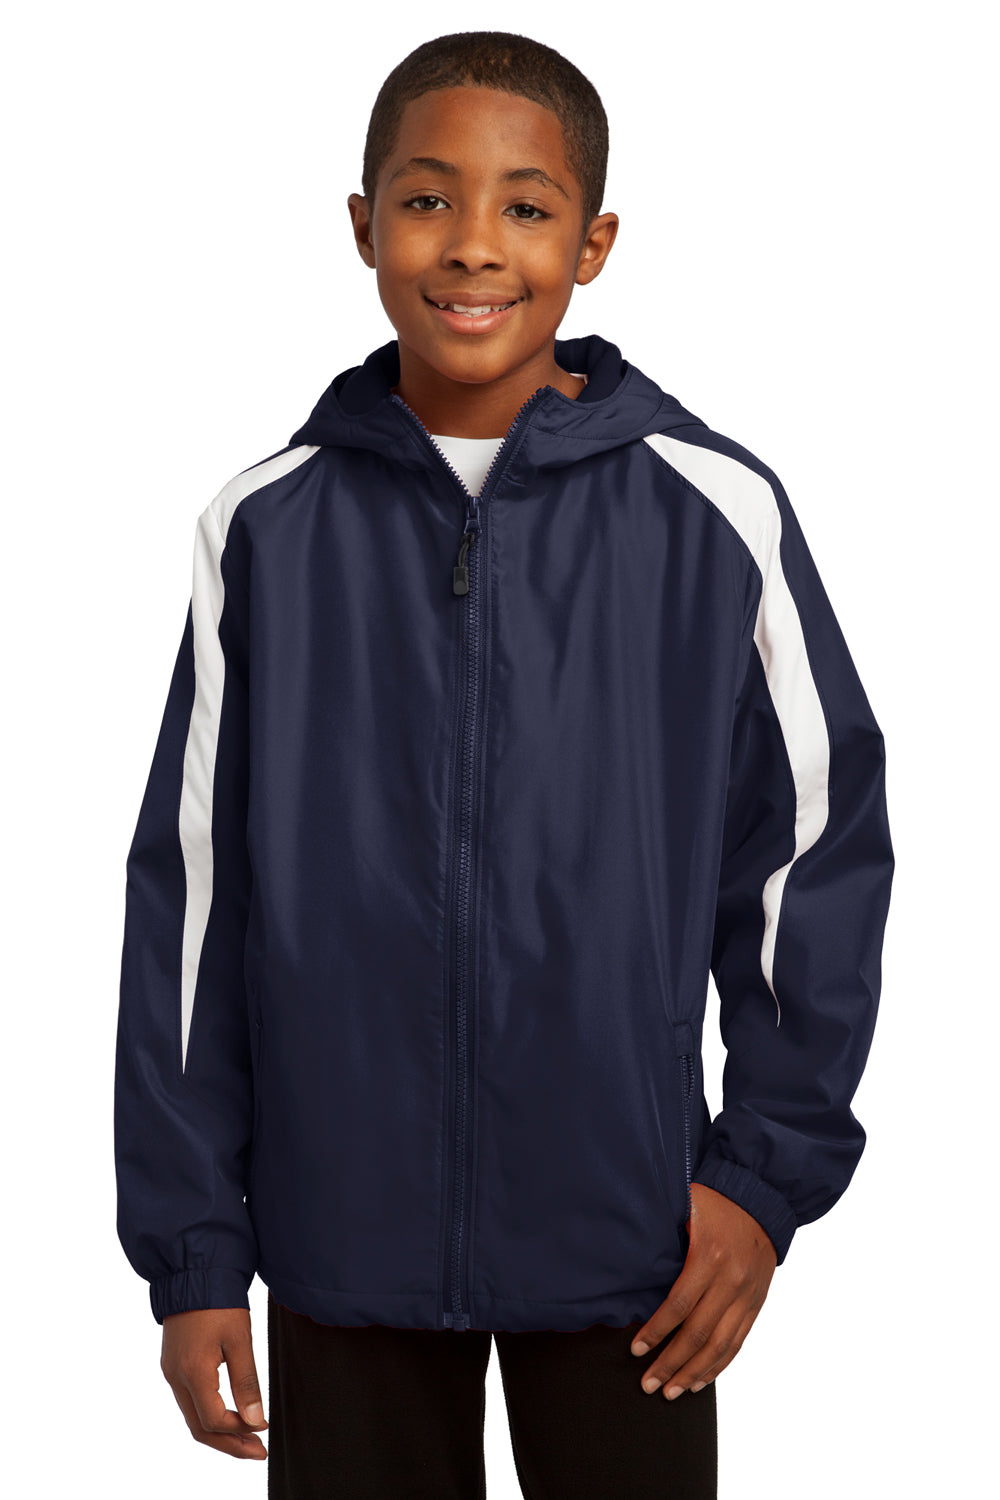 Sport-Tek YST81 Youth Full Zip Hooded Jacket Navy Blue Front